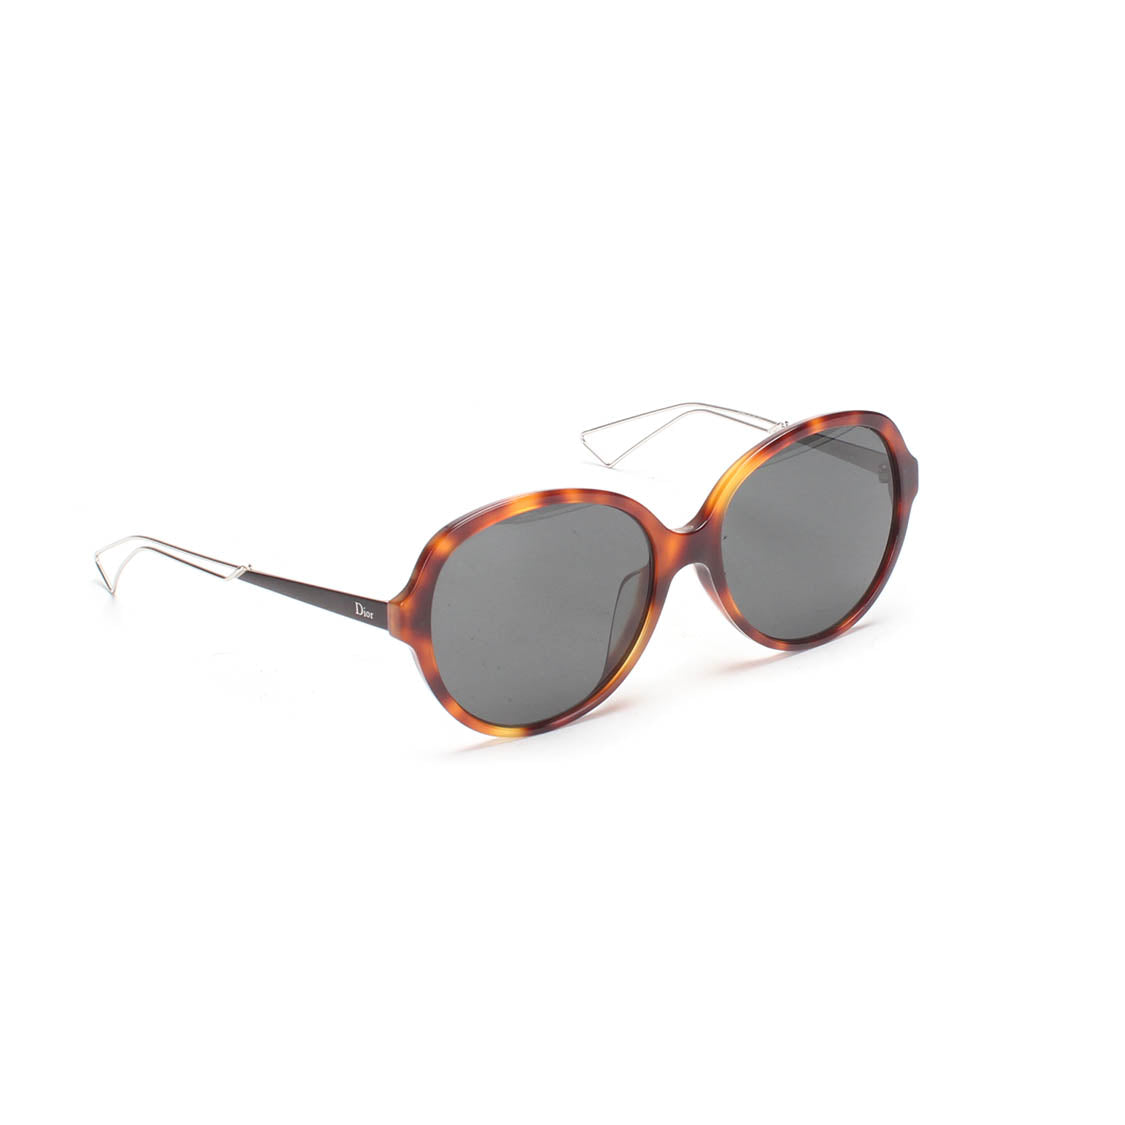 DiorConfidentK Round Sunglasses